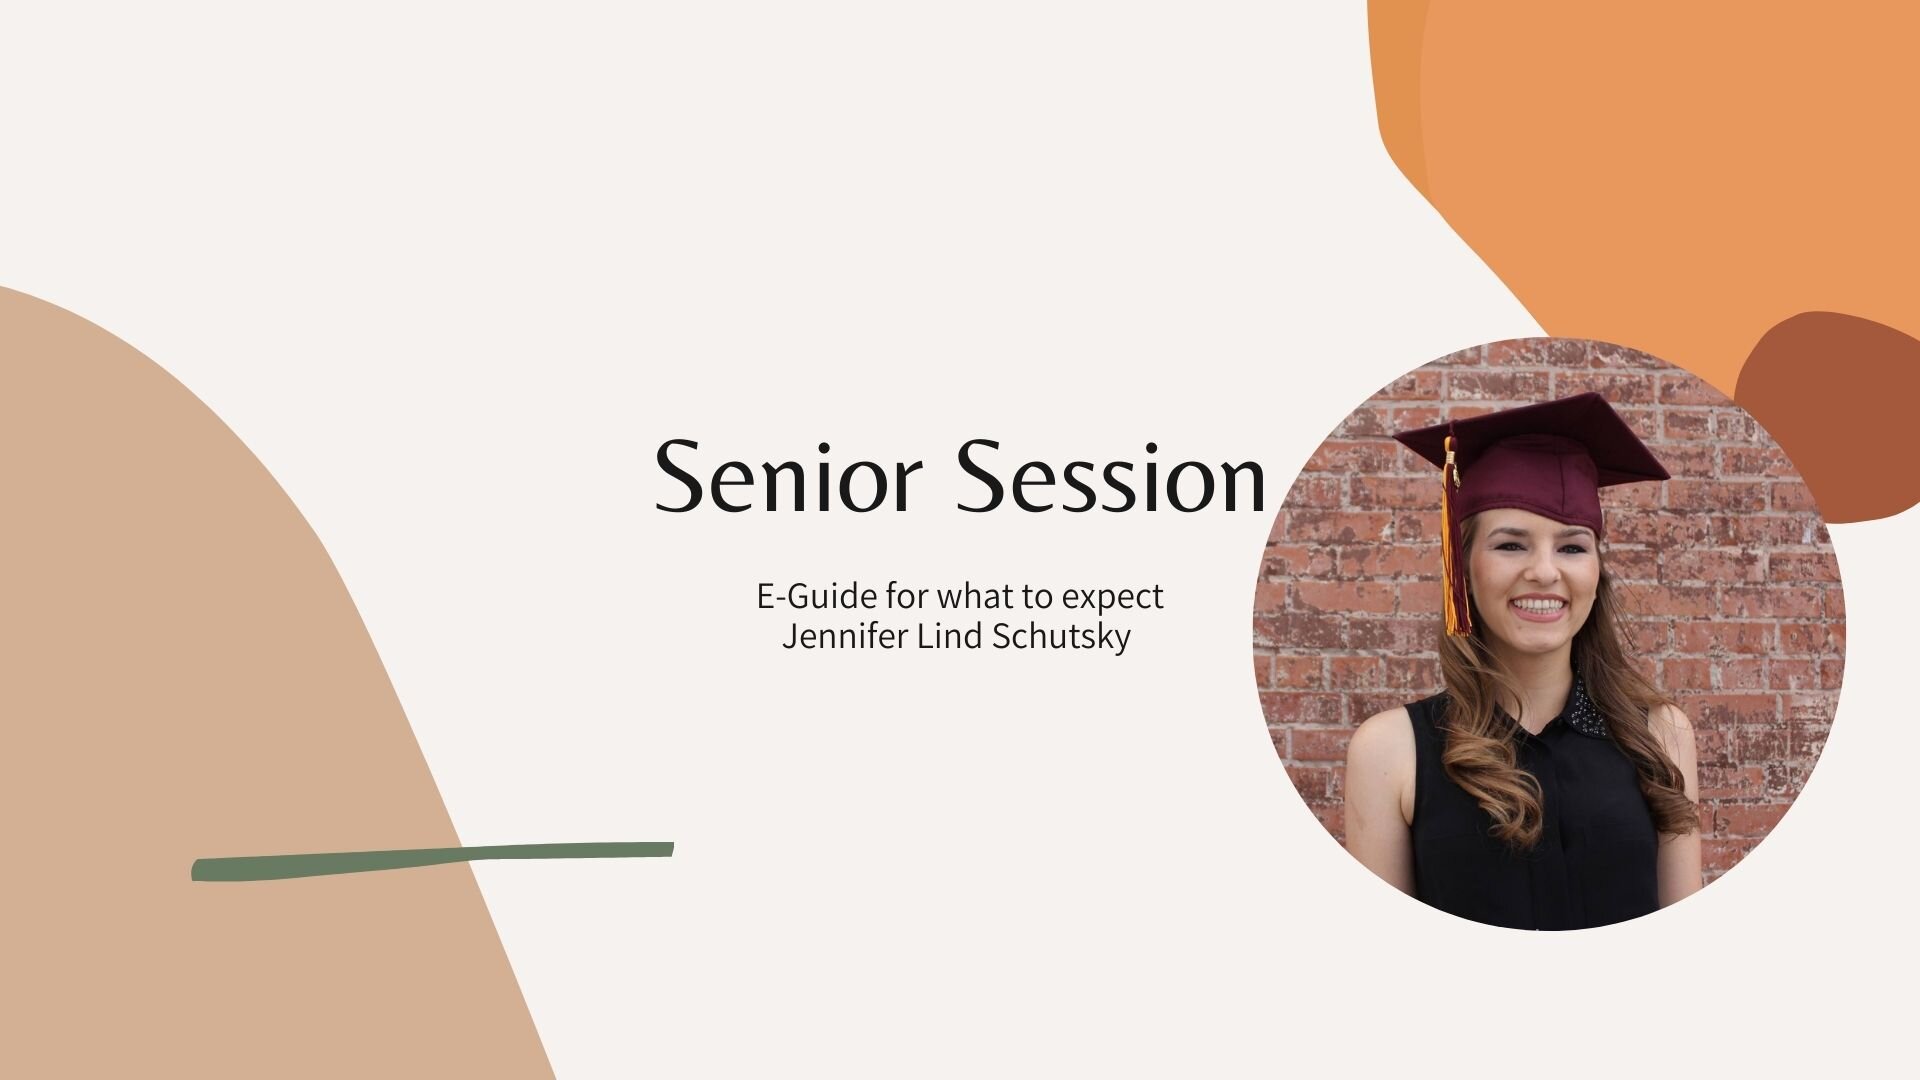 Senior Session Photoshoot Guide for Senior Graduation Photo Session with the Best Senior Photos Photographer in Phoenix; Jennifer Lind Schutsky.